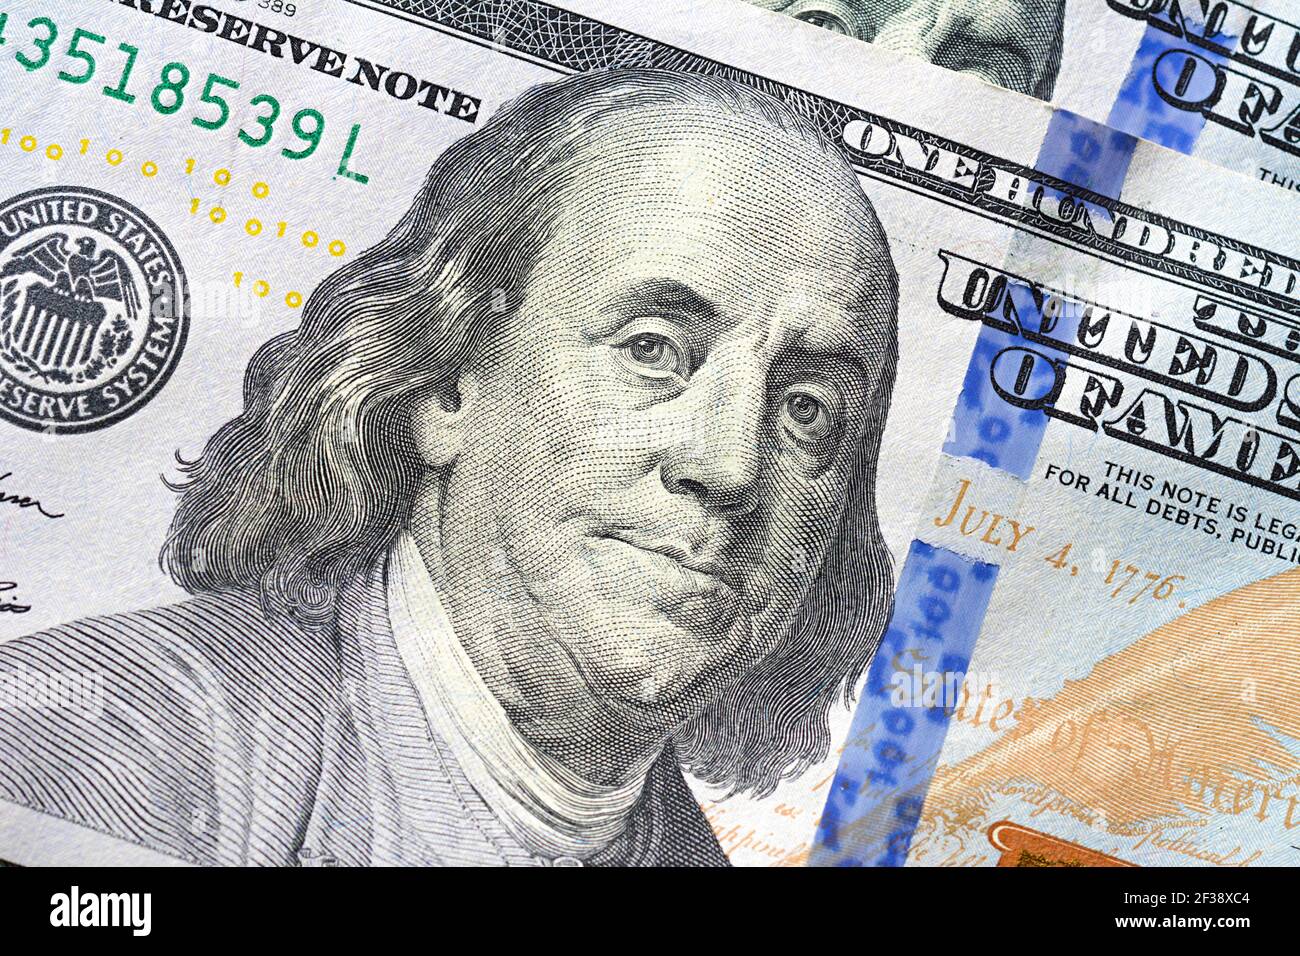 Close up of Benjamin Franklin face sur 100 US dollar bill Banque D'Images